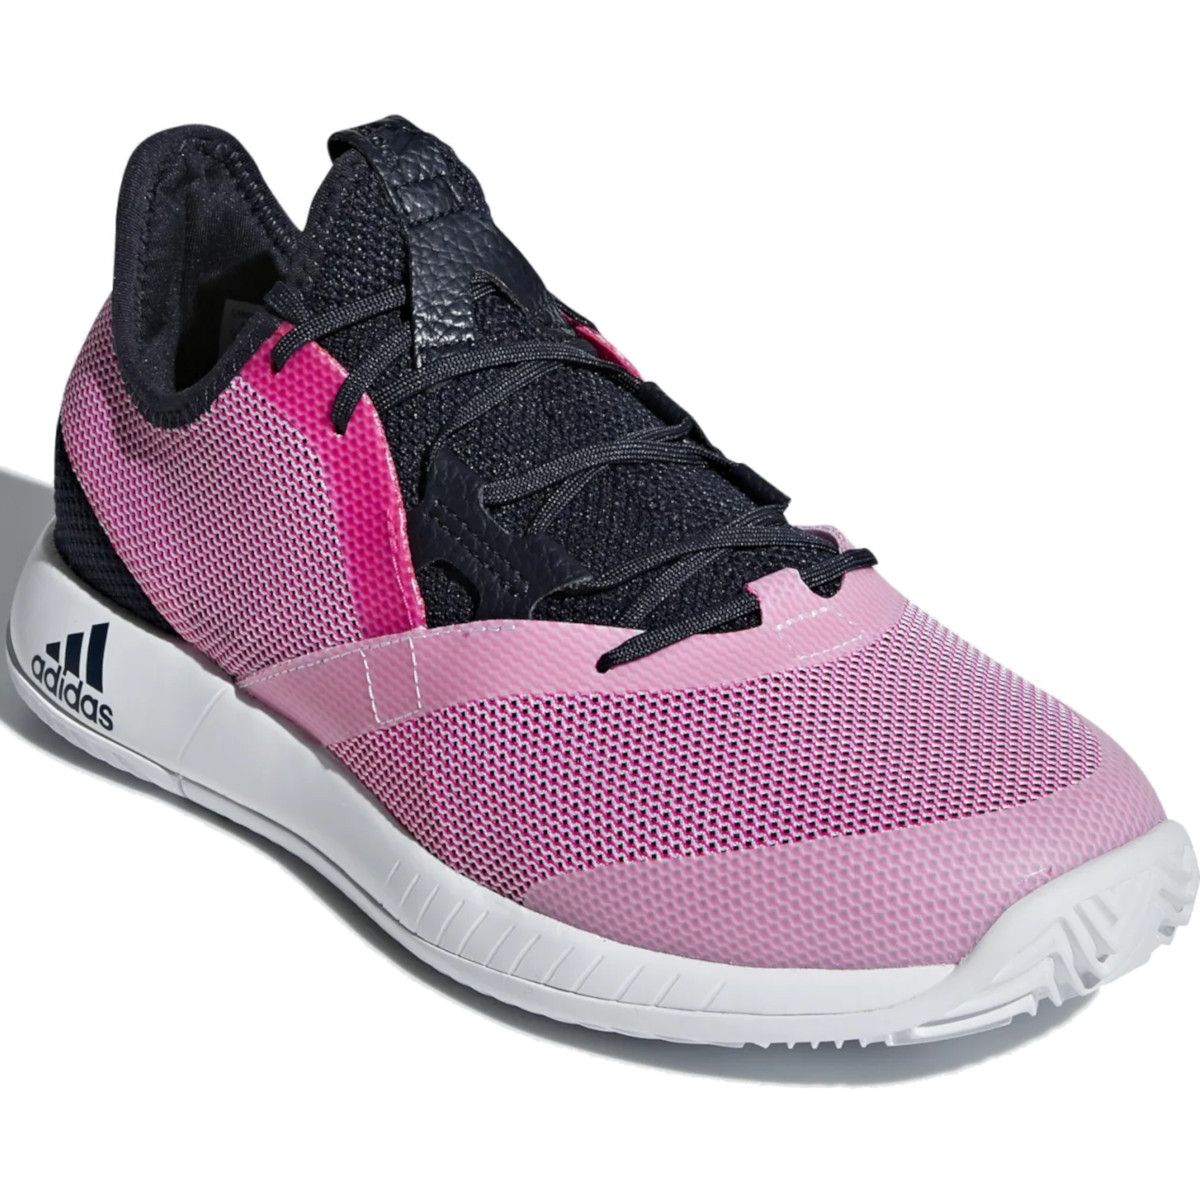 adidas Adizero Defiant Bounce Women's Tennis Shoes AH2111